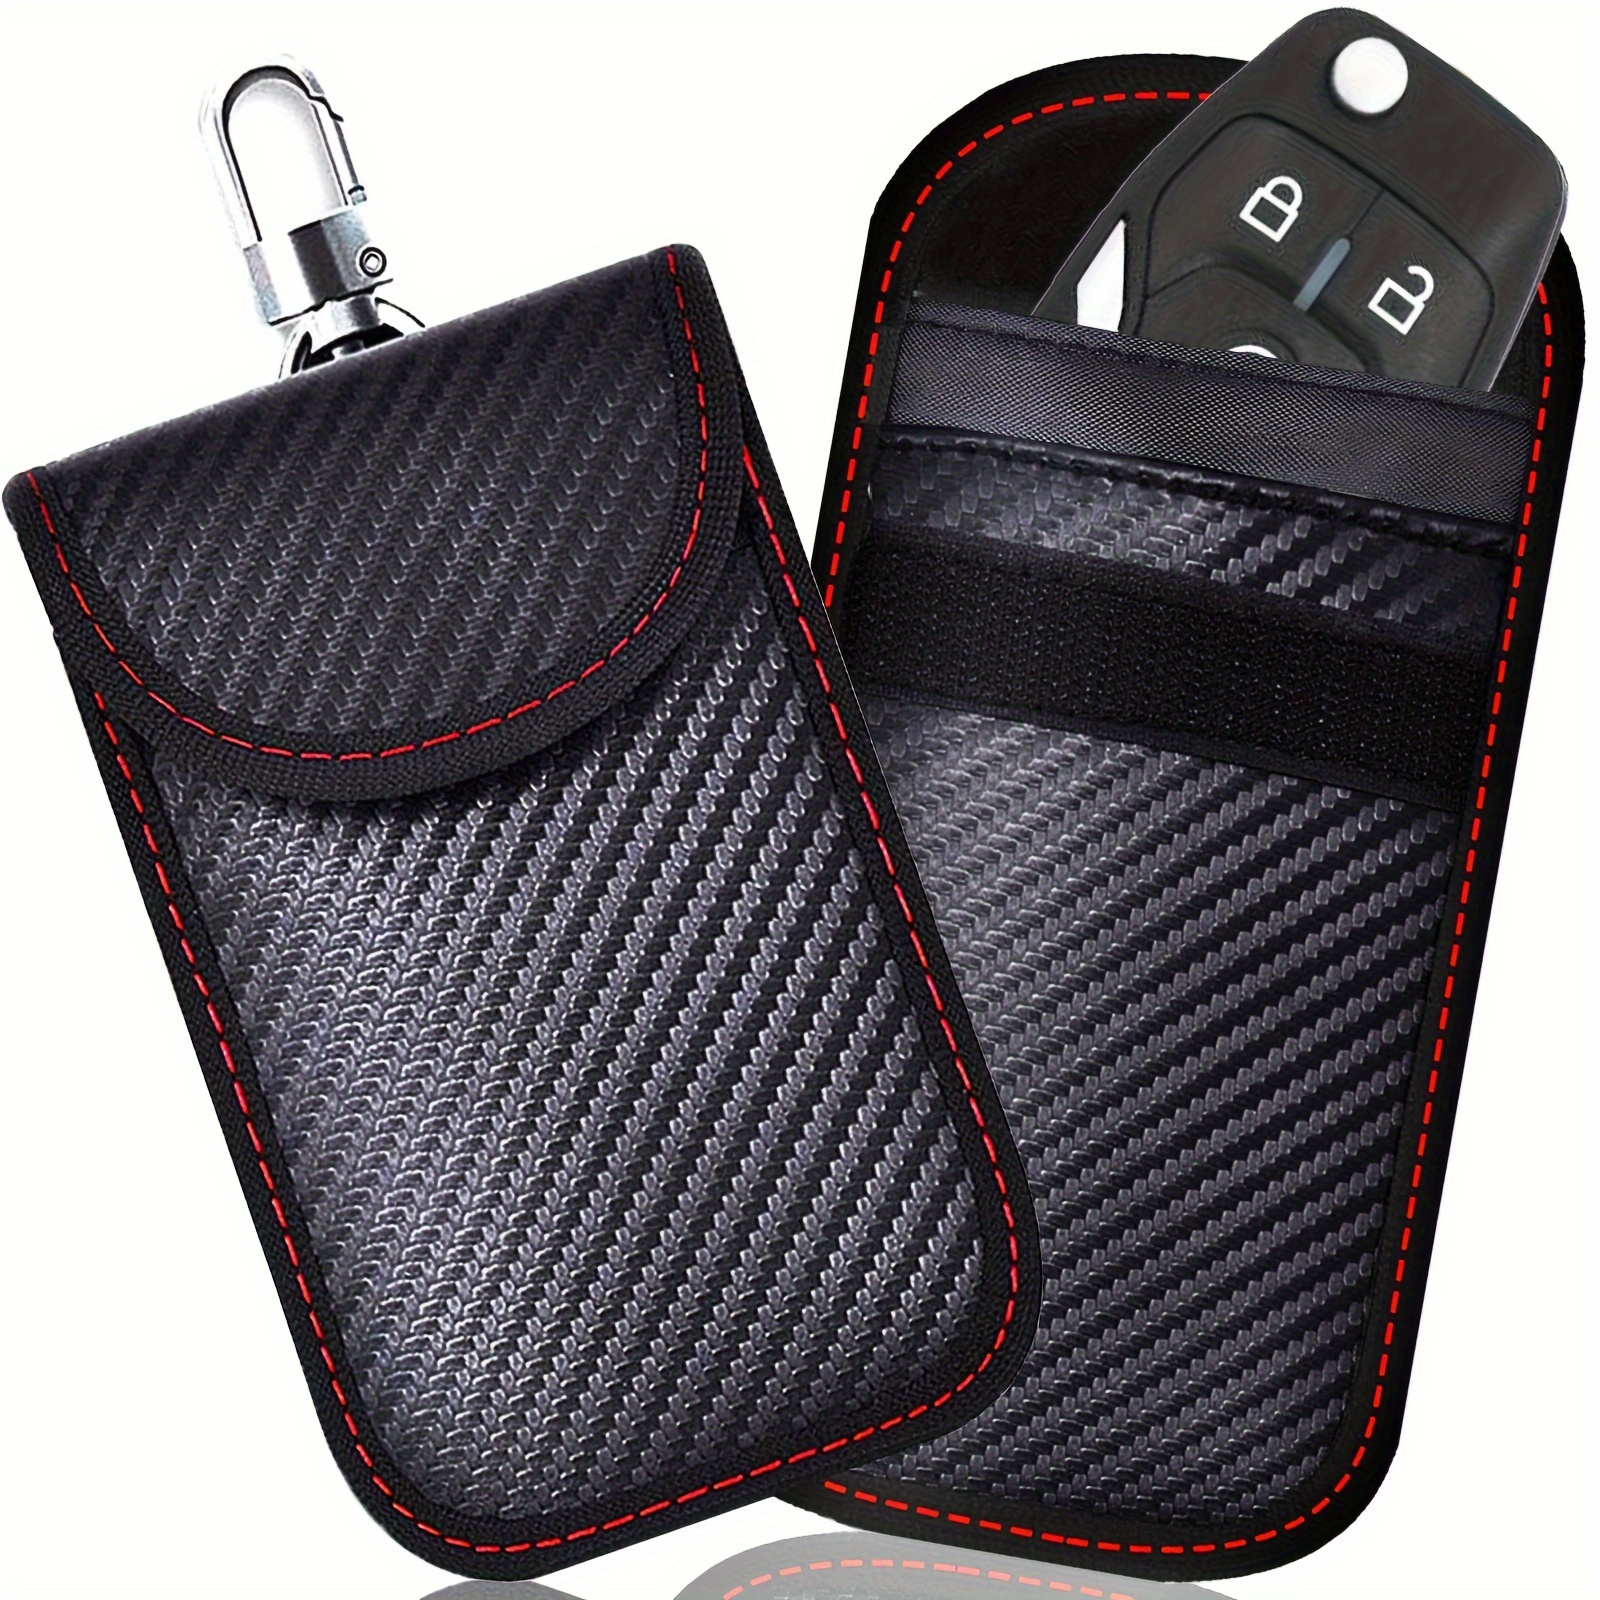 JXE JXO Faraday Box for Car Keys, RFID Key Fob Protector, Car Key